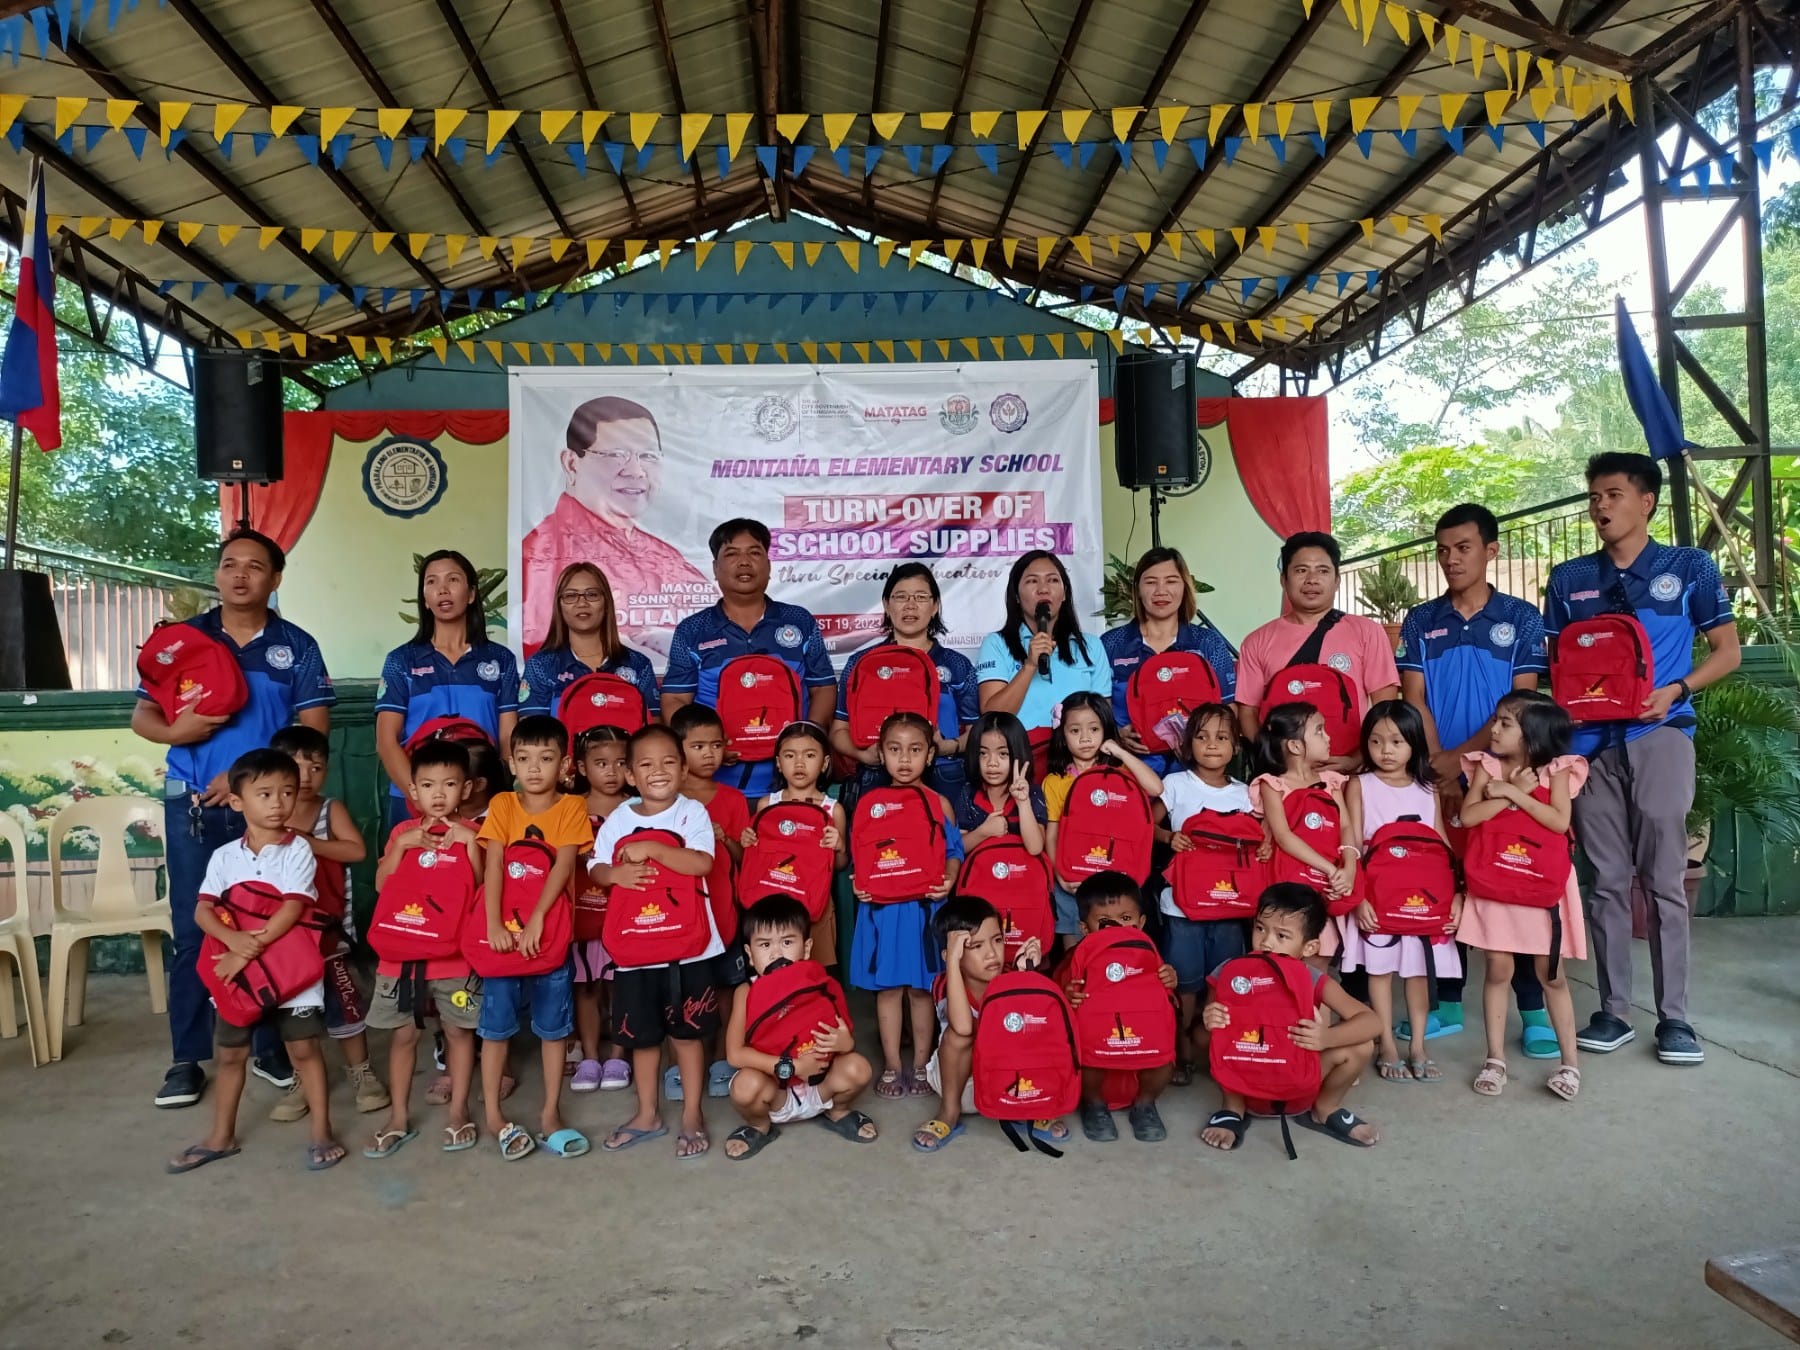 Distribution of School Bags and Supplies, Montaña Elementary School